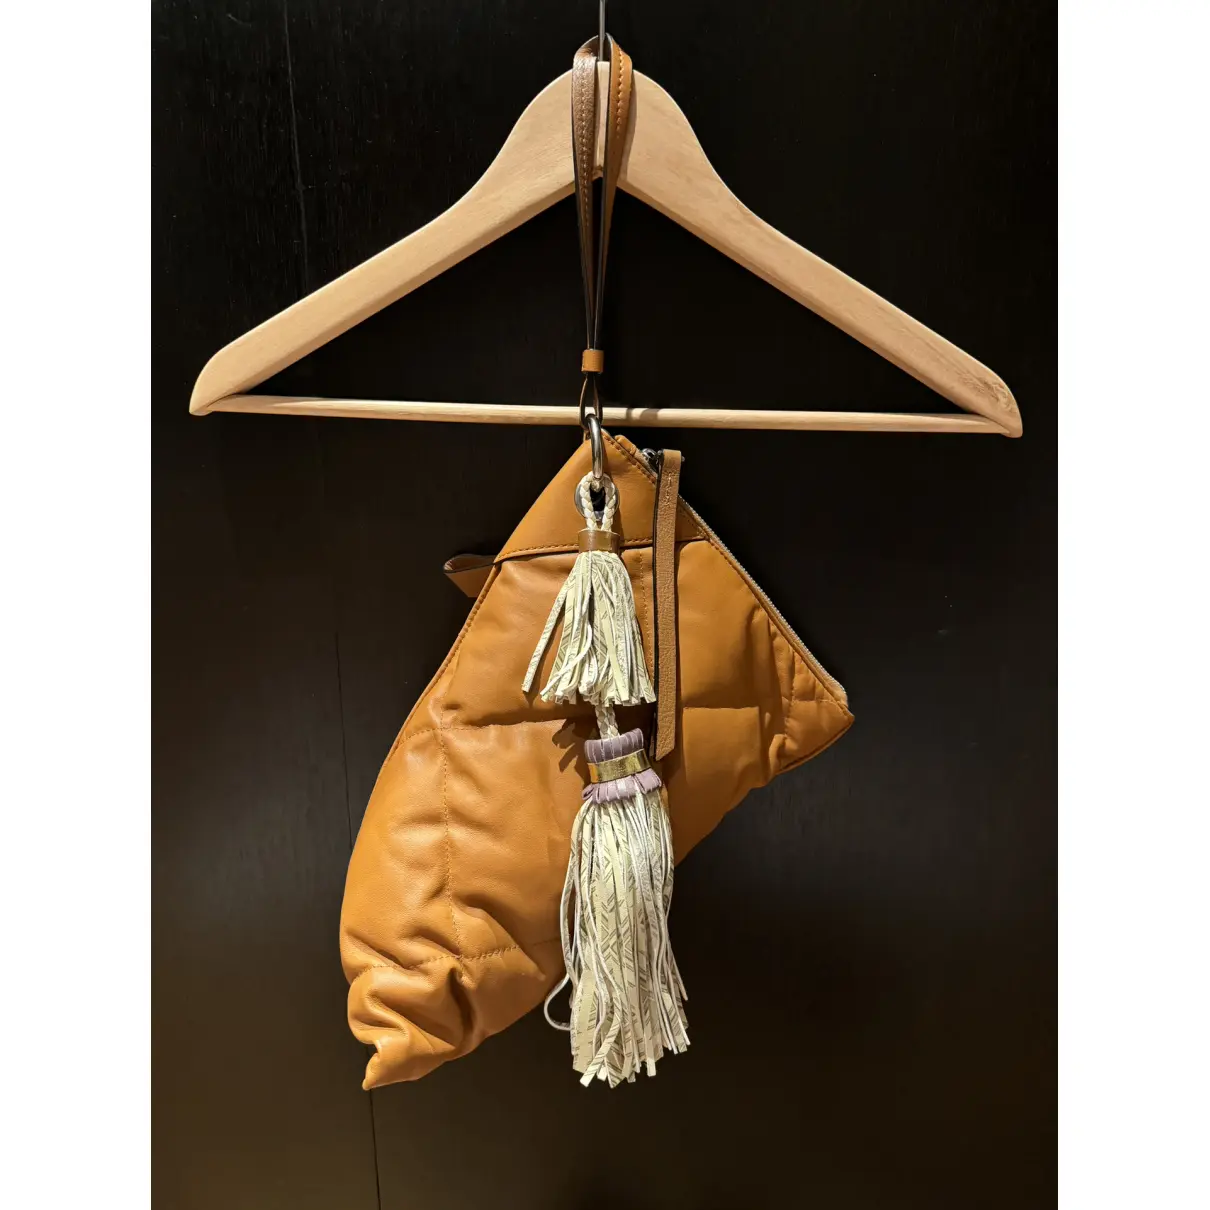 Buy Moncler Leather clutch bag online